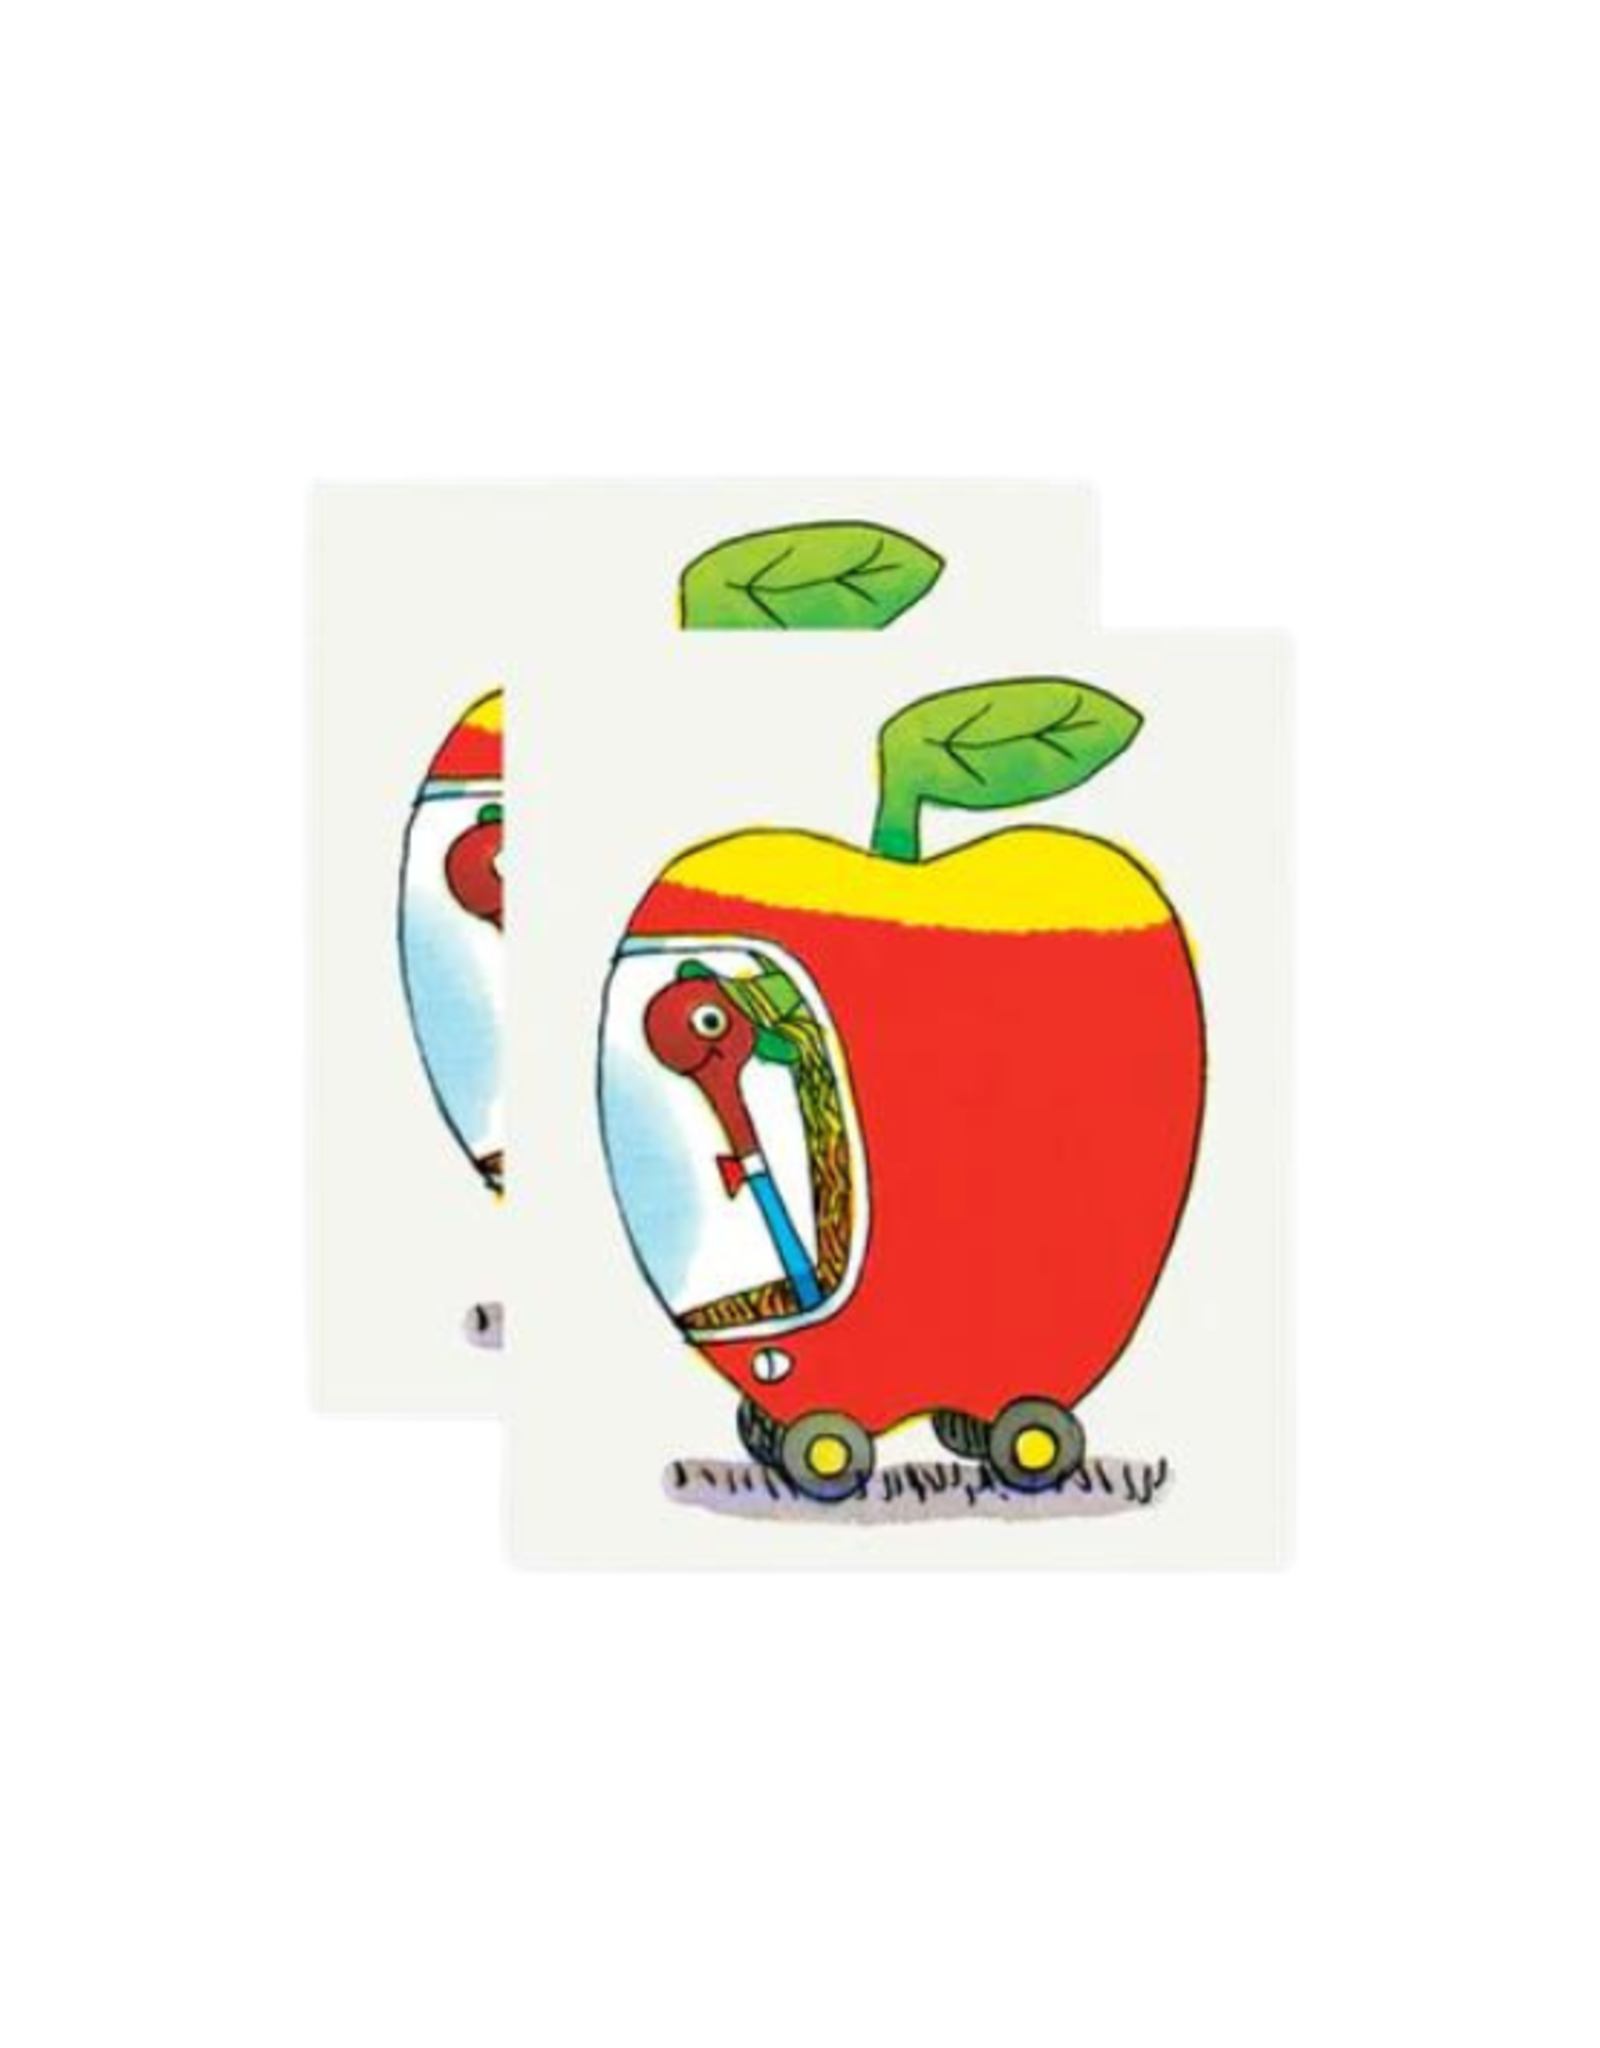 Tattly Tattly - Lowly Apple Car Tattoo Pair